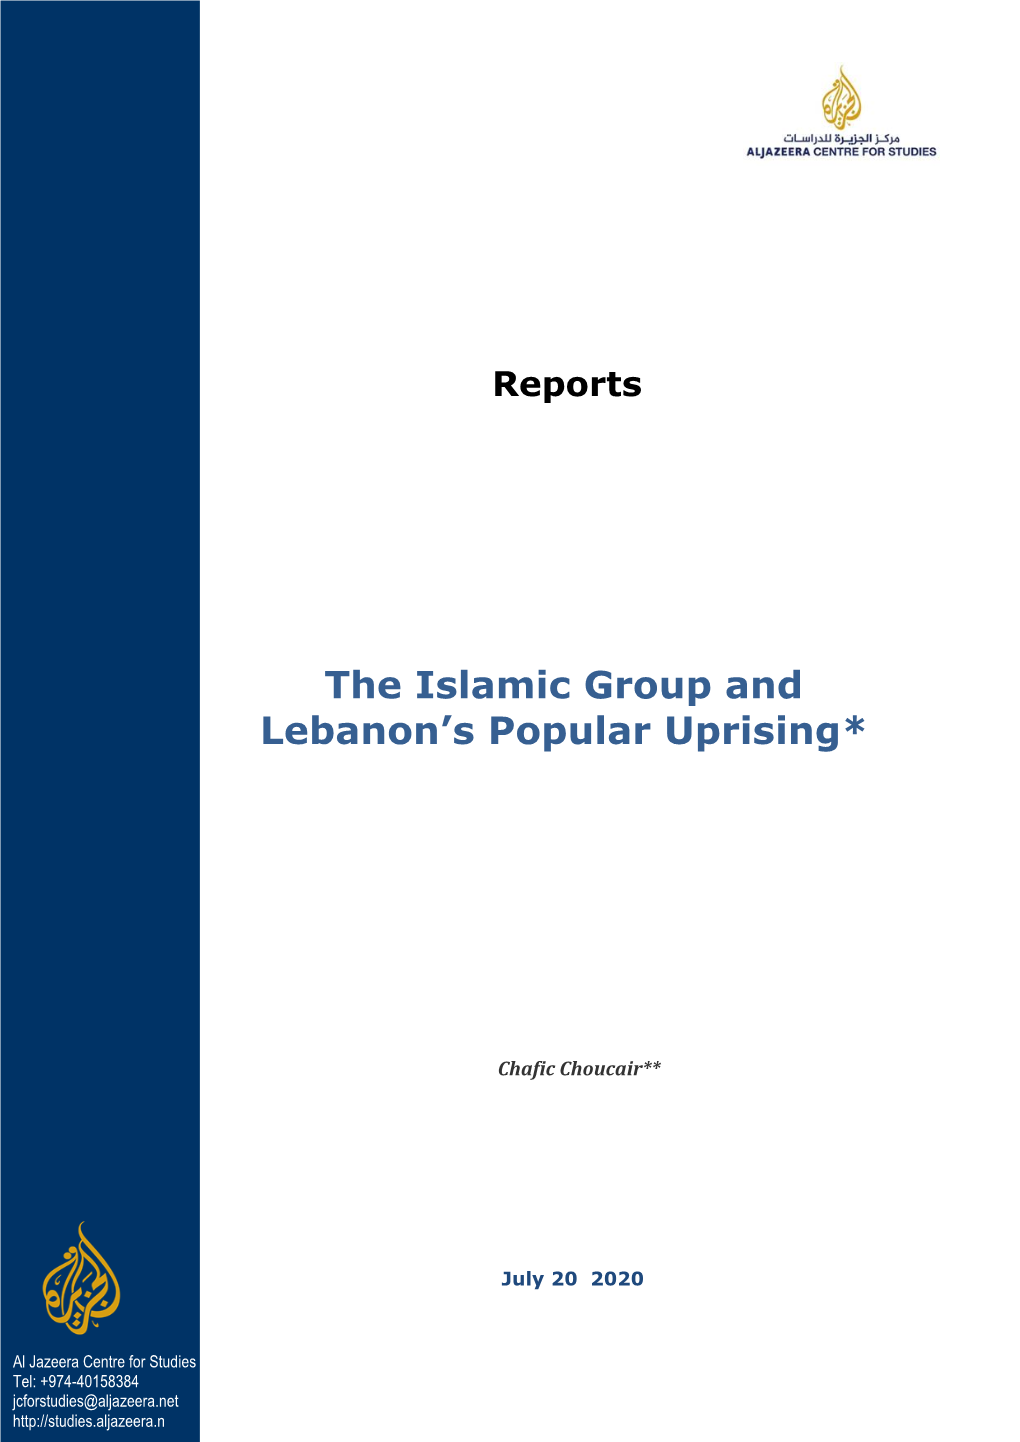 The Islamic Group and Lebanon's Popular Uprising